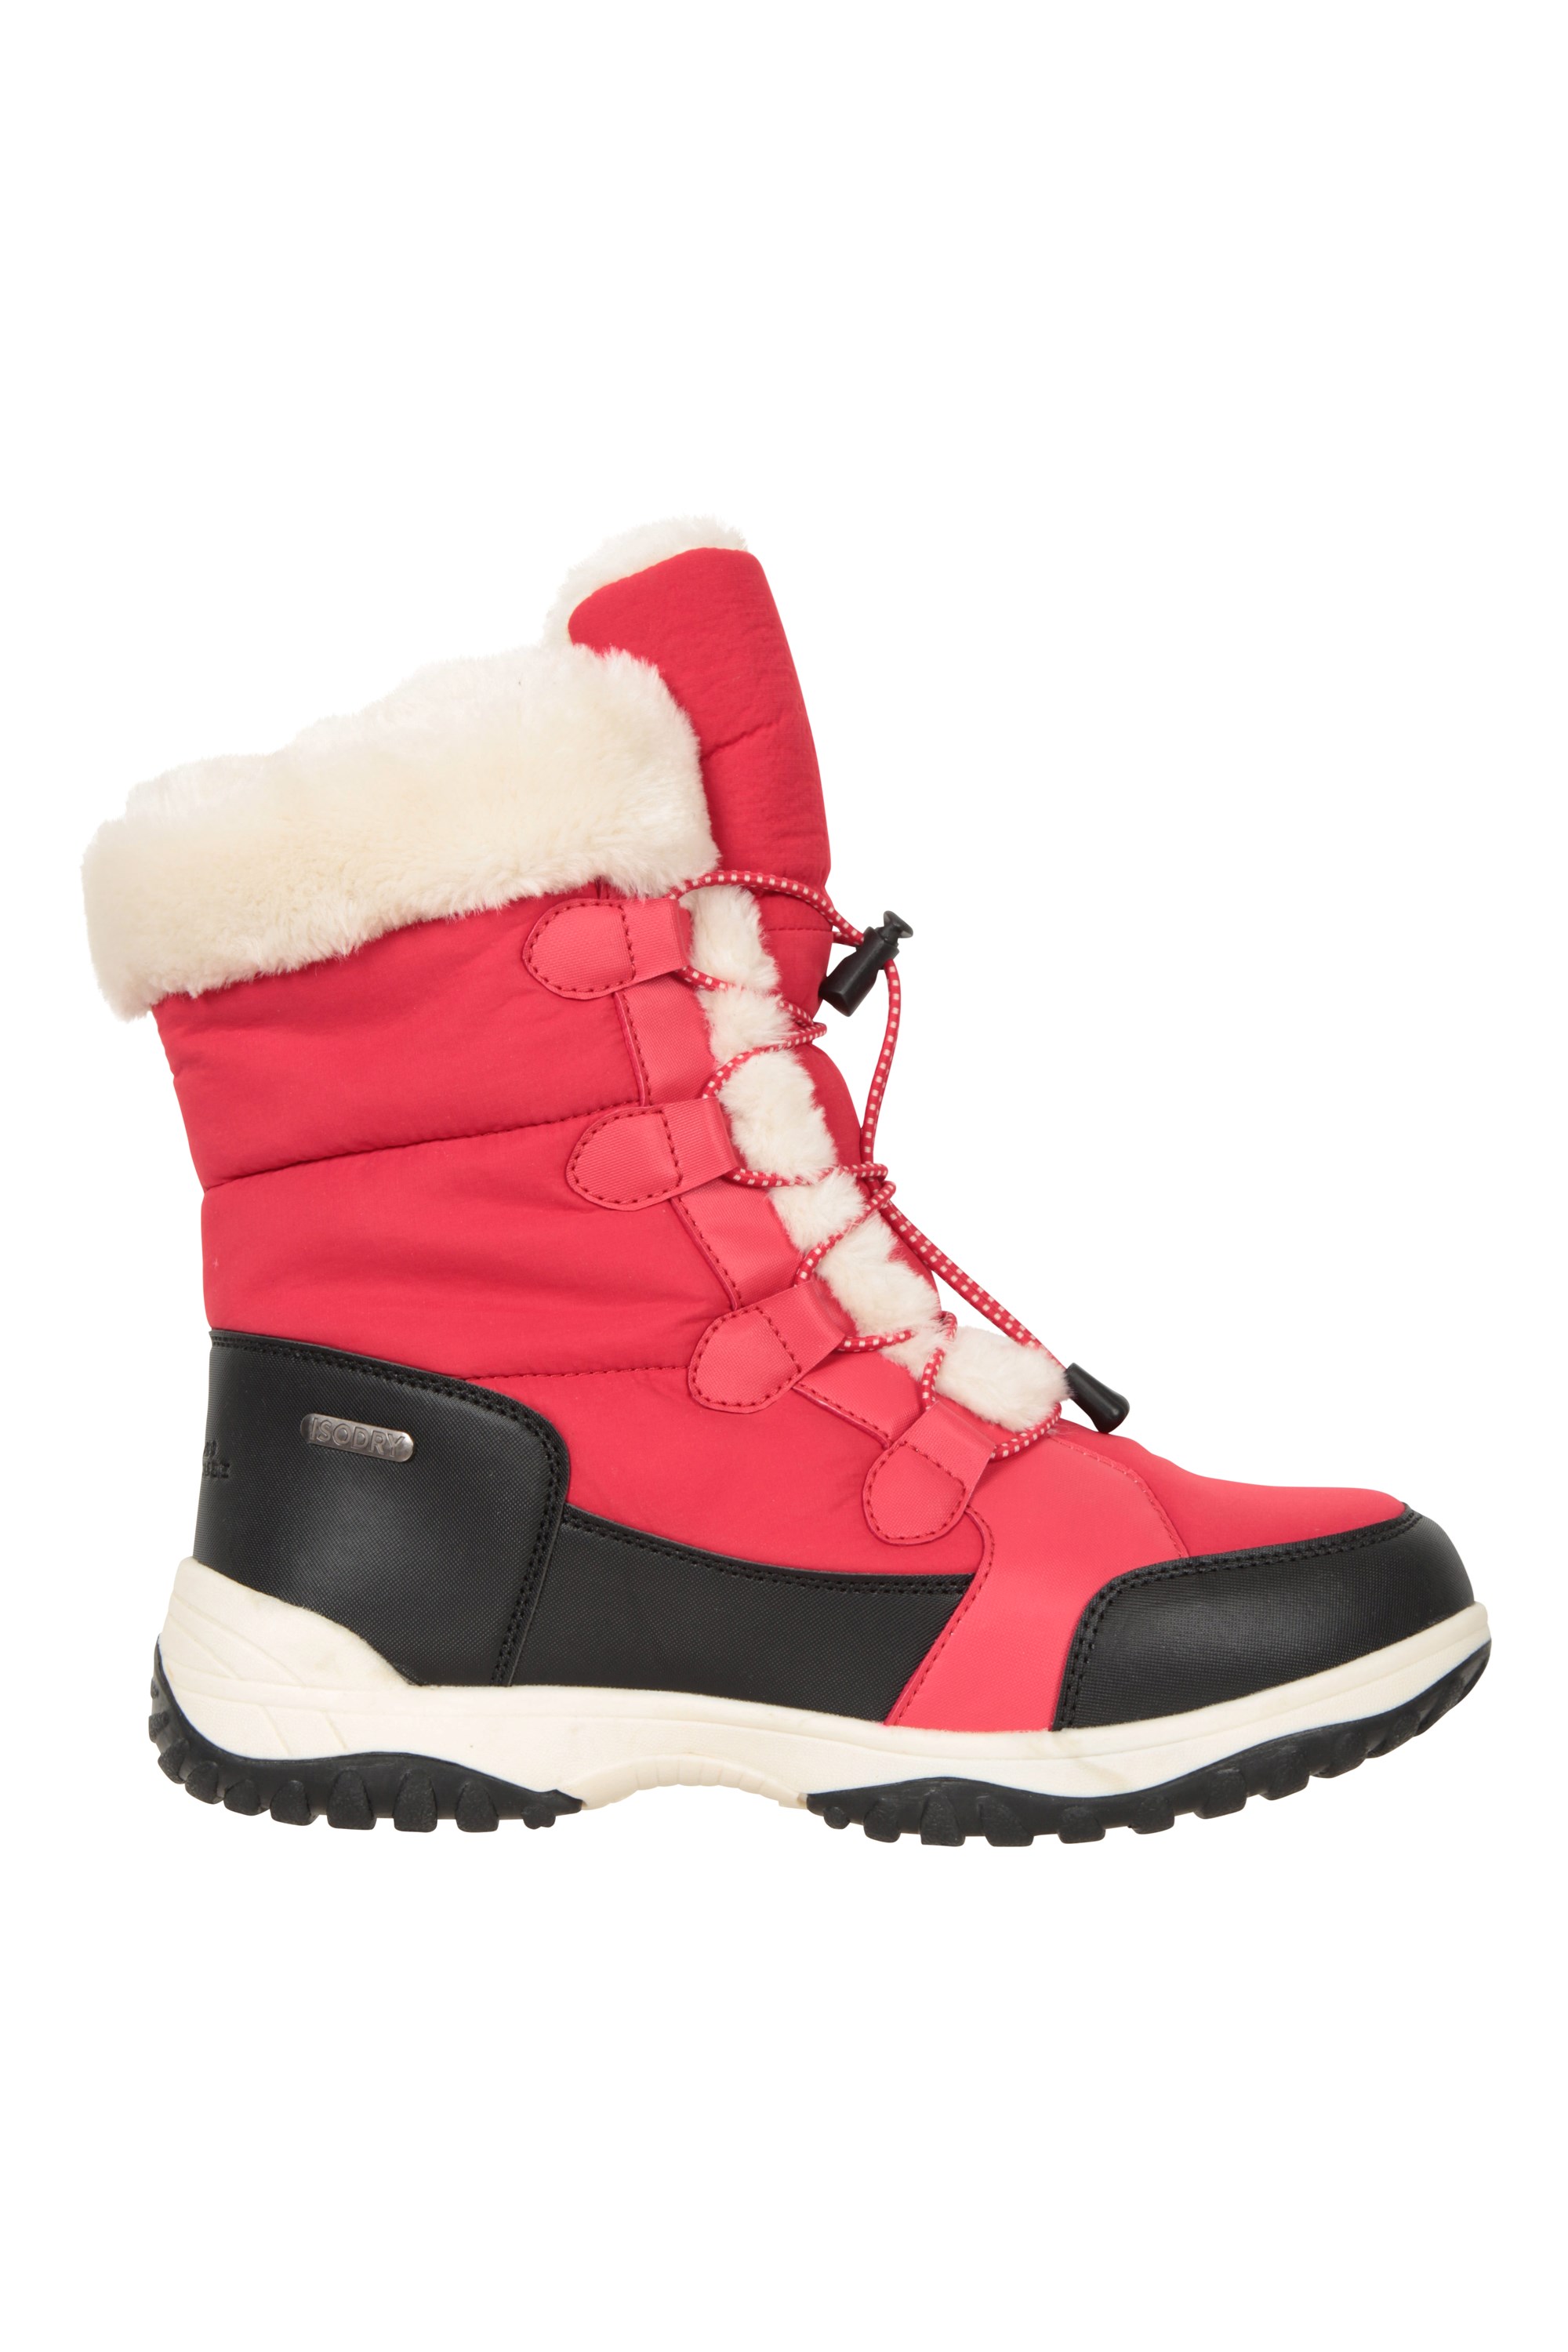 DSG Women's Rime Snow Boots - The Warming Store